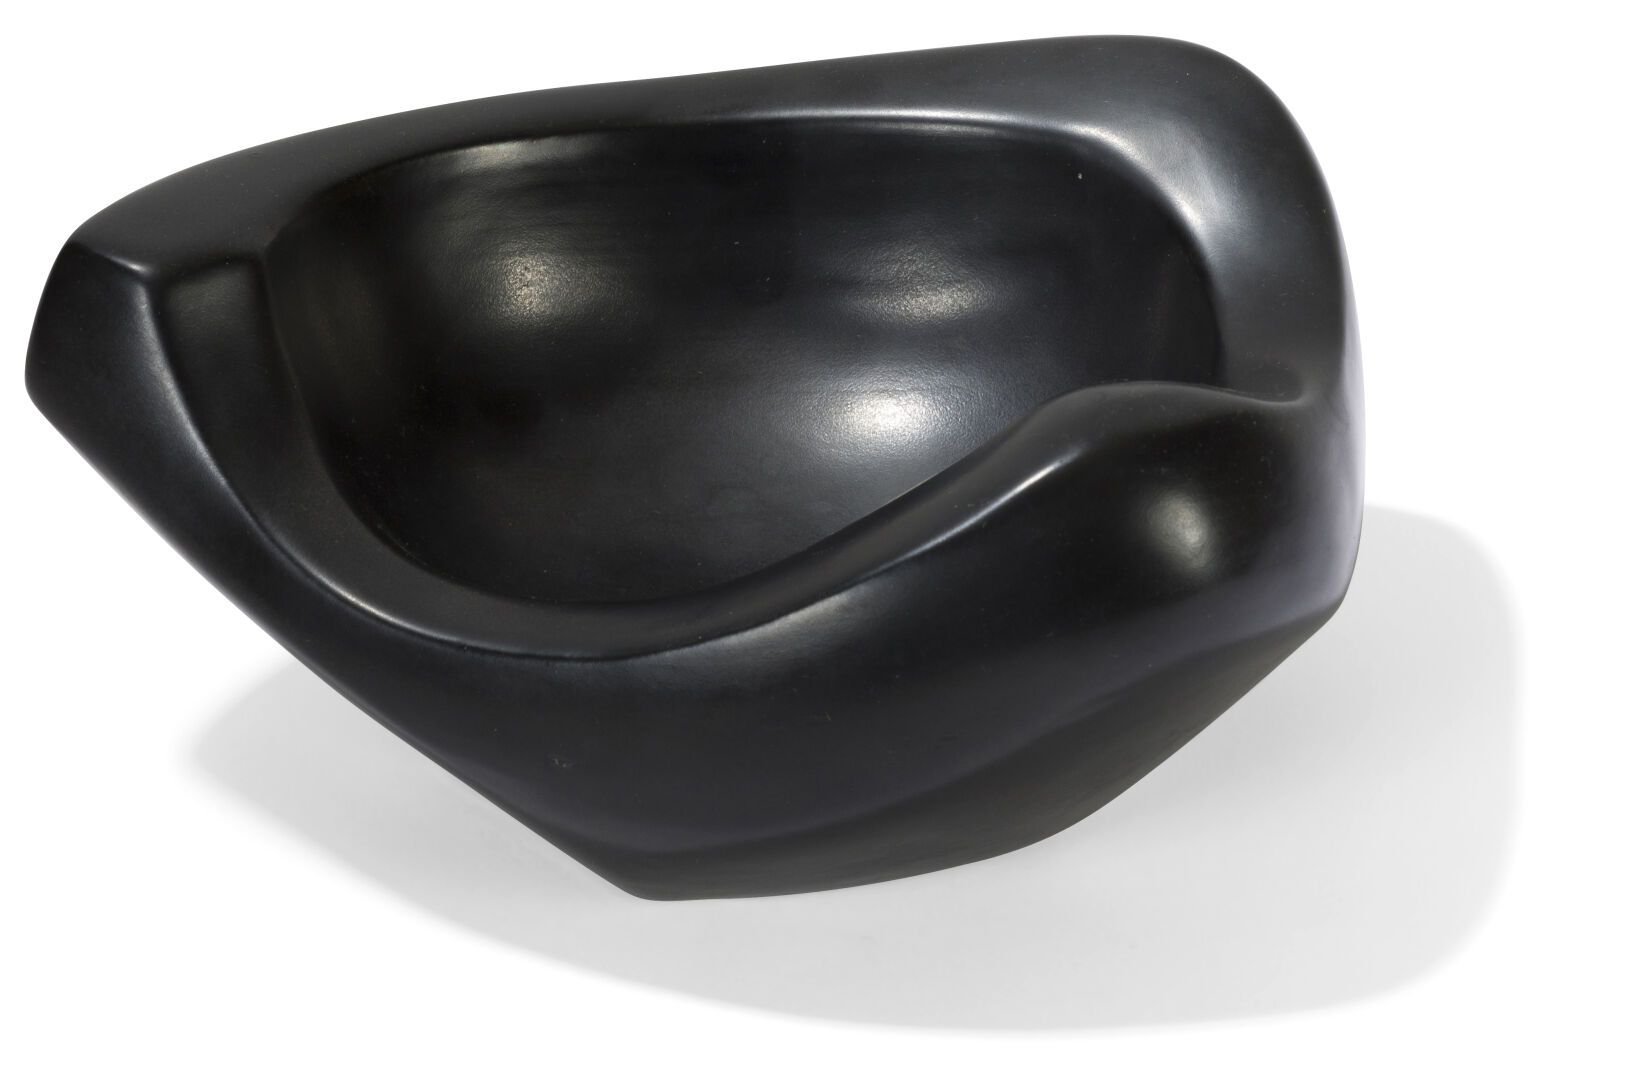 Null 乔治-茹夫(1910-1964)
自由形式，大尺寸，模型设计于[1952年]前后。
杯状雕塑。
黑色釉面陶瓷证明。
1950s.
底座下有JOUVE的&hellip;